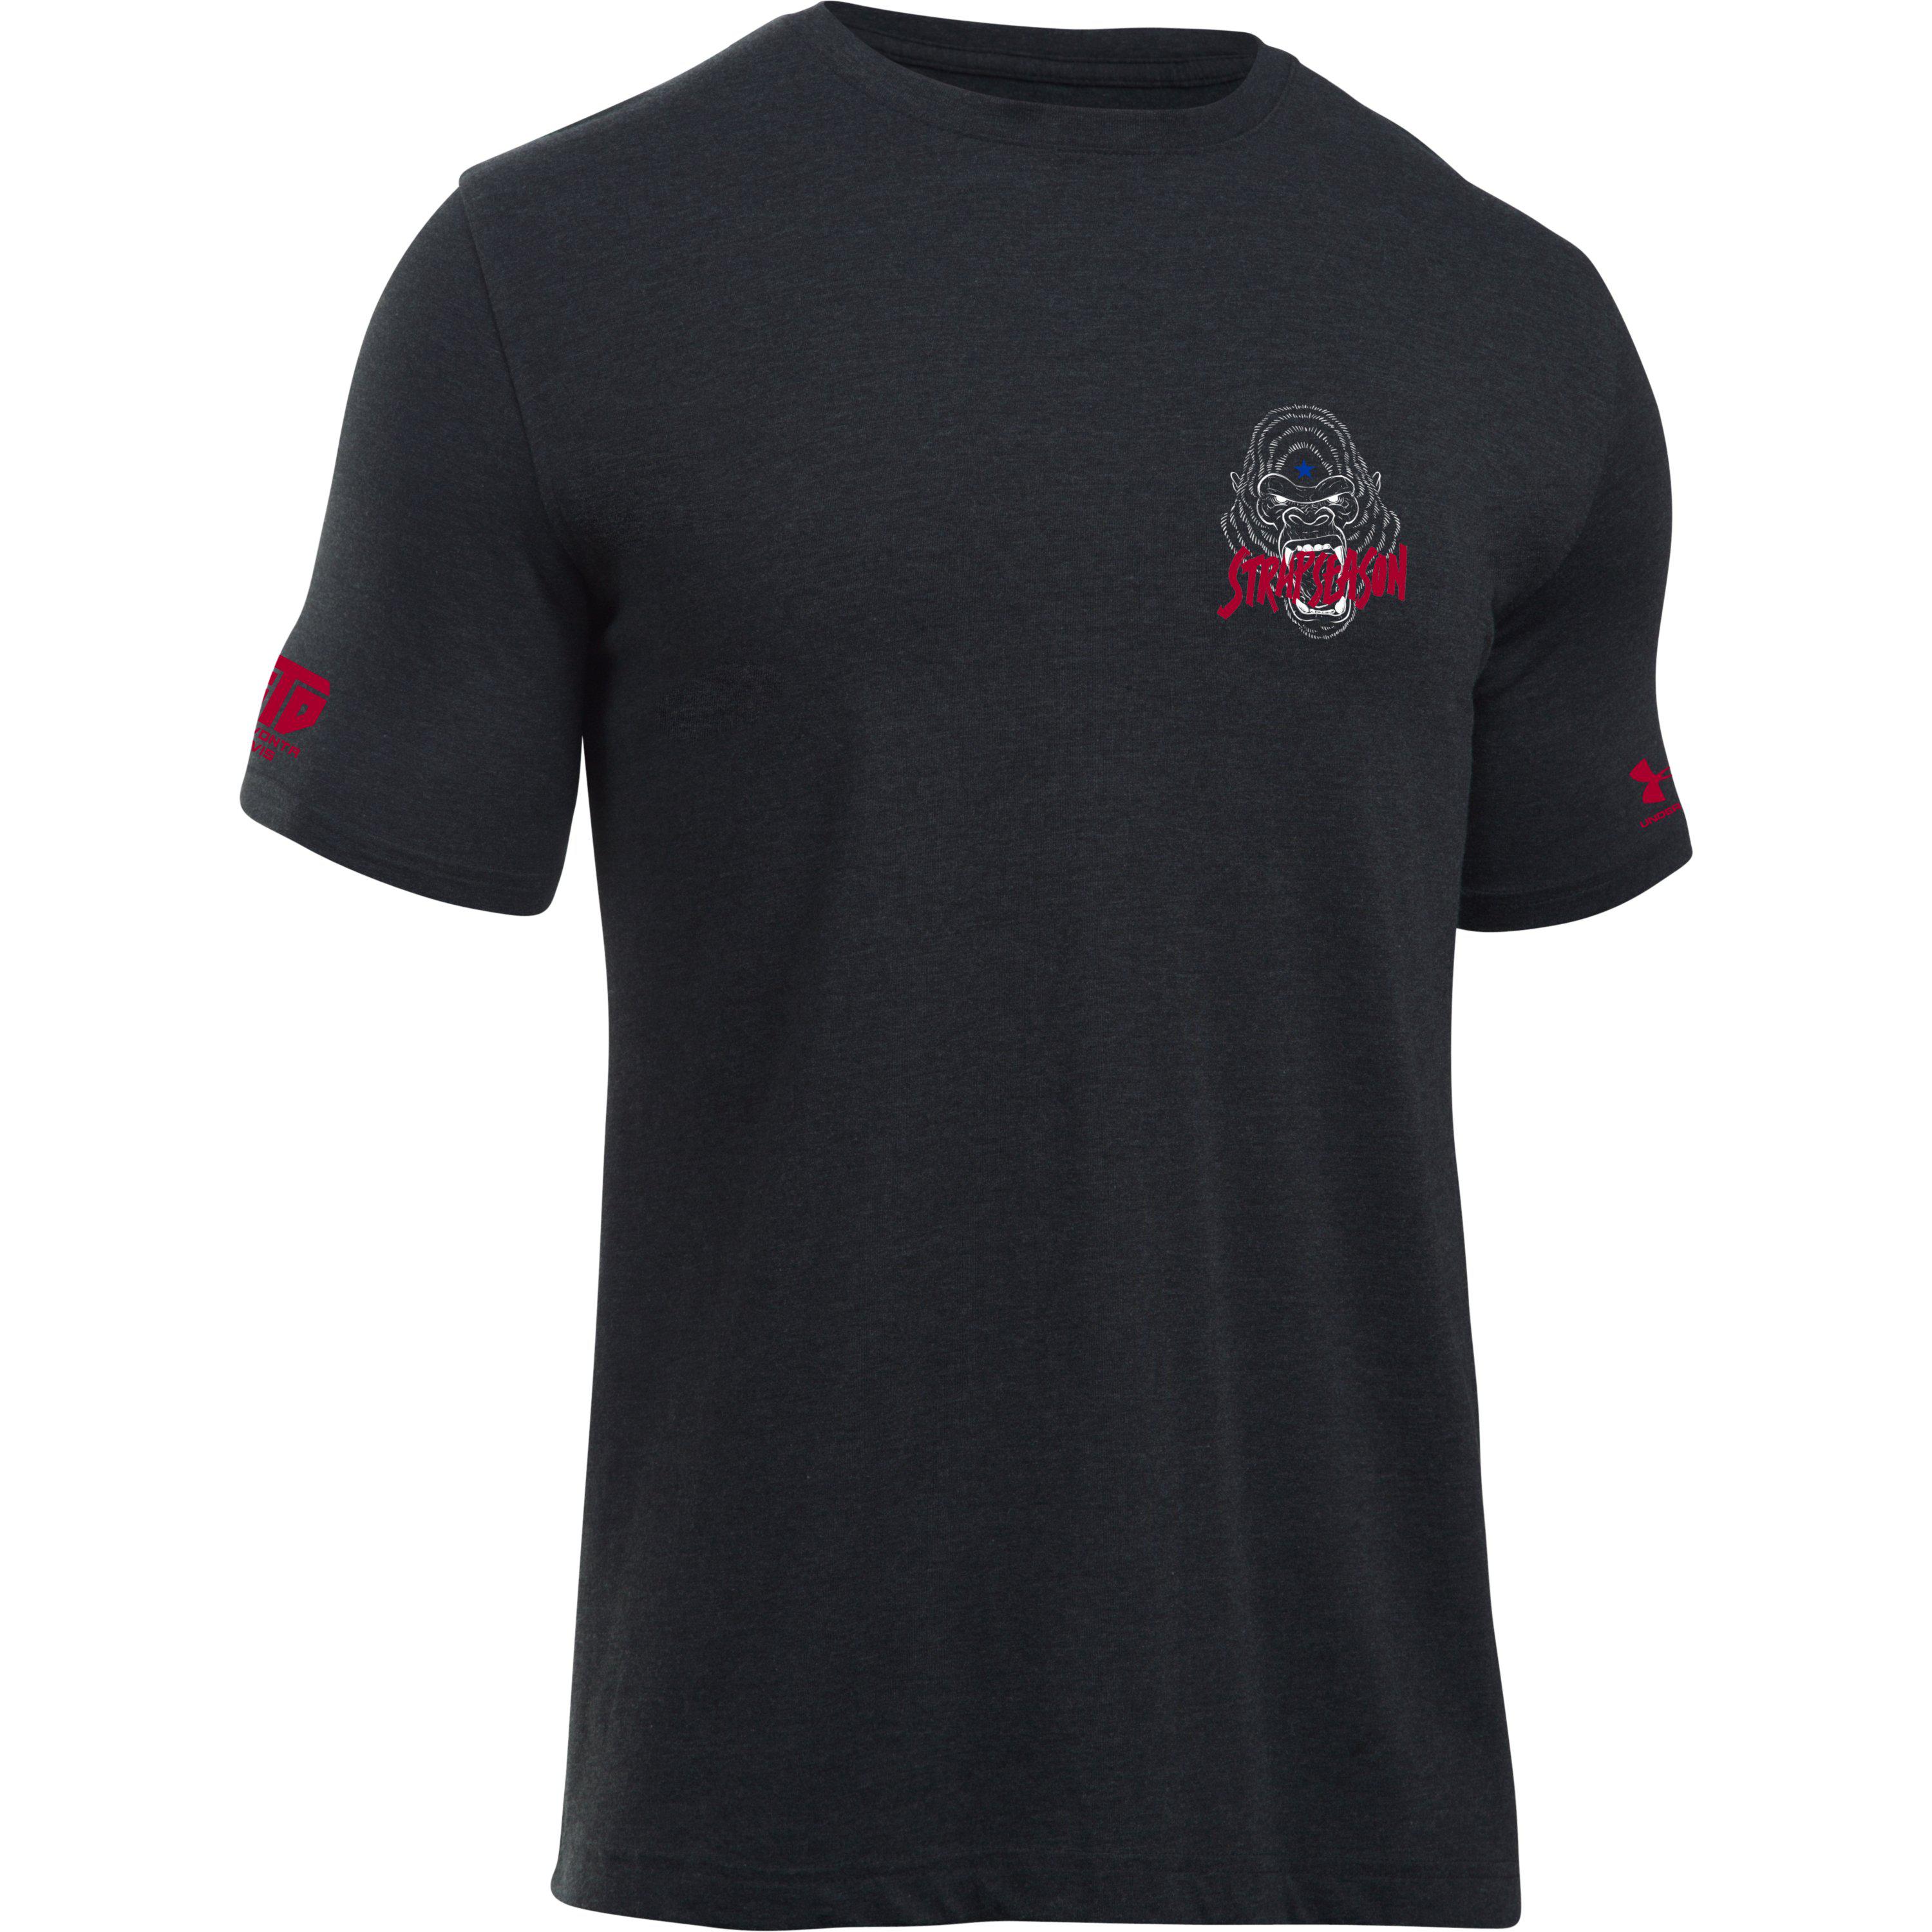 Davis Gorilla T-shirt in Black 